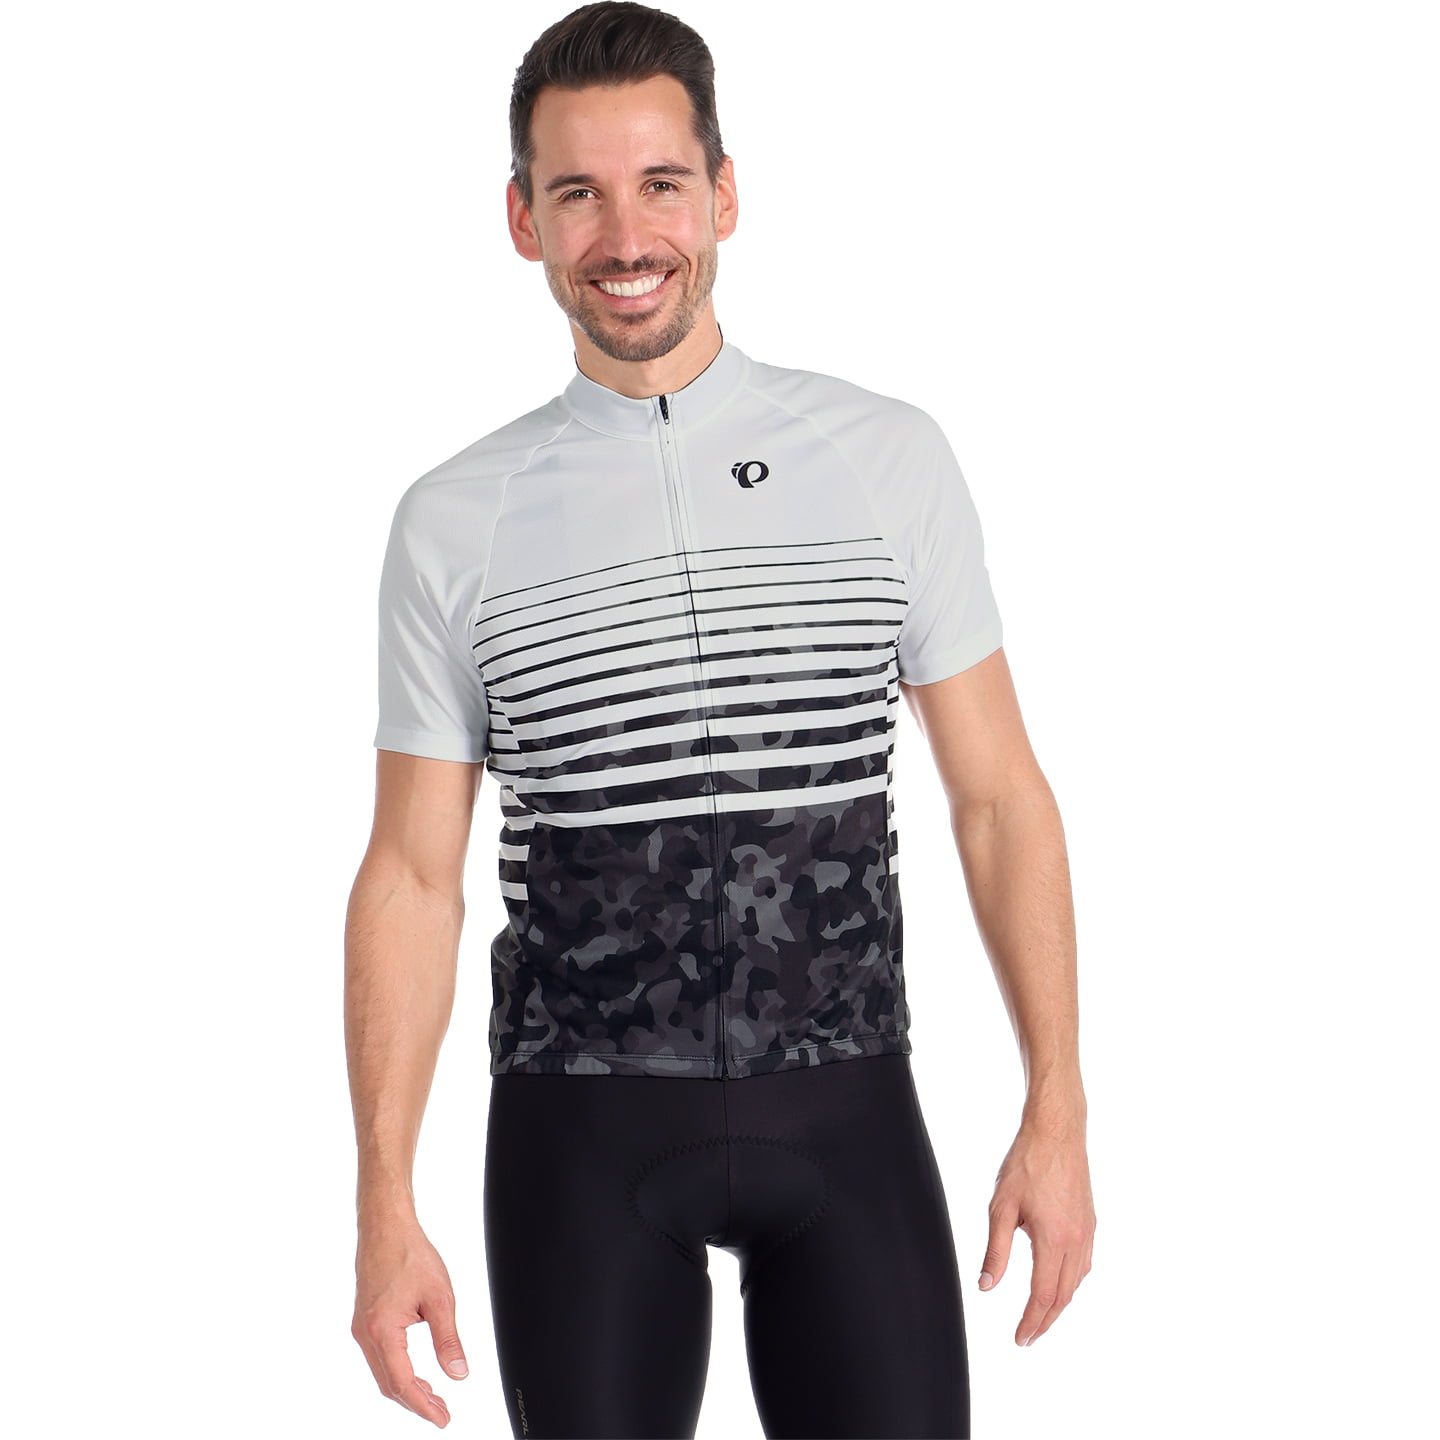 PEARL IZUMI Classic Short Sleeve Jersey Short Sleeve Jersey, for men, size S, Cycling jersey, Cycling clothing